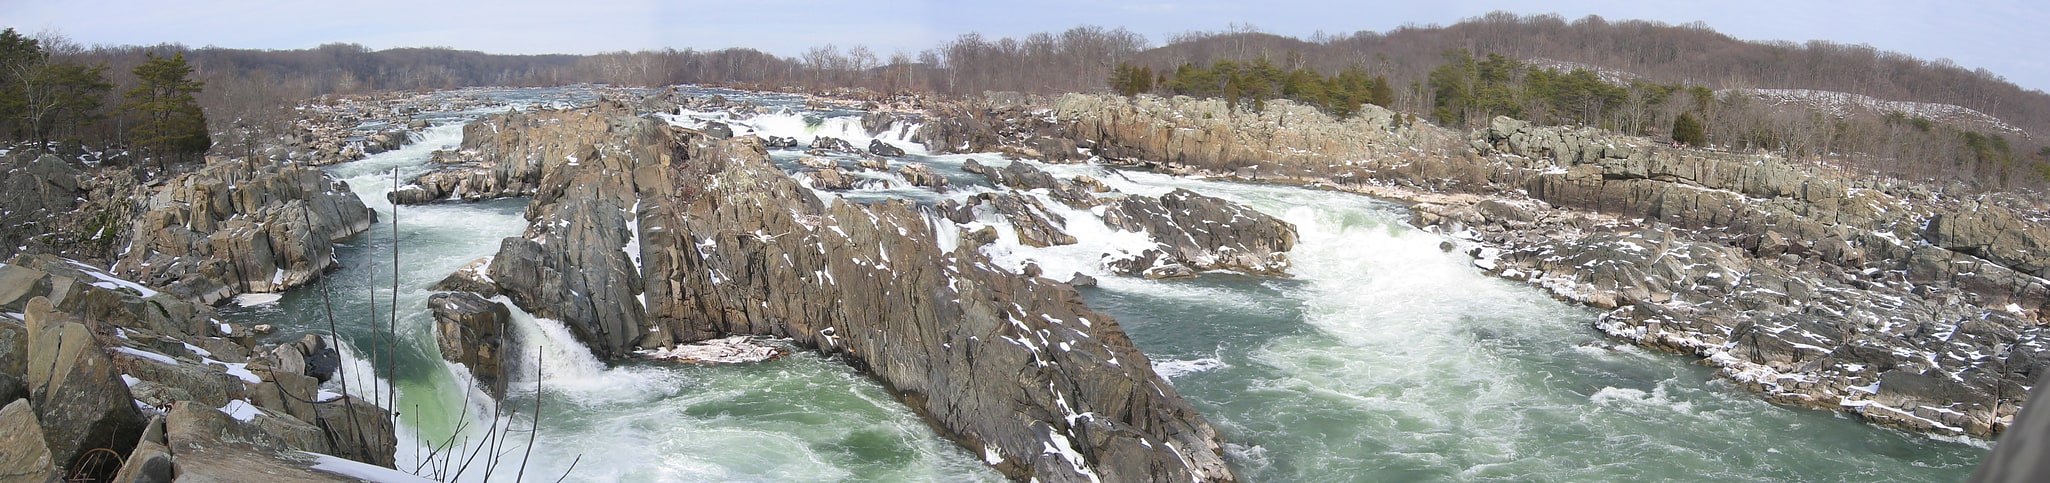 Great Falls, Stany Zjednoczone